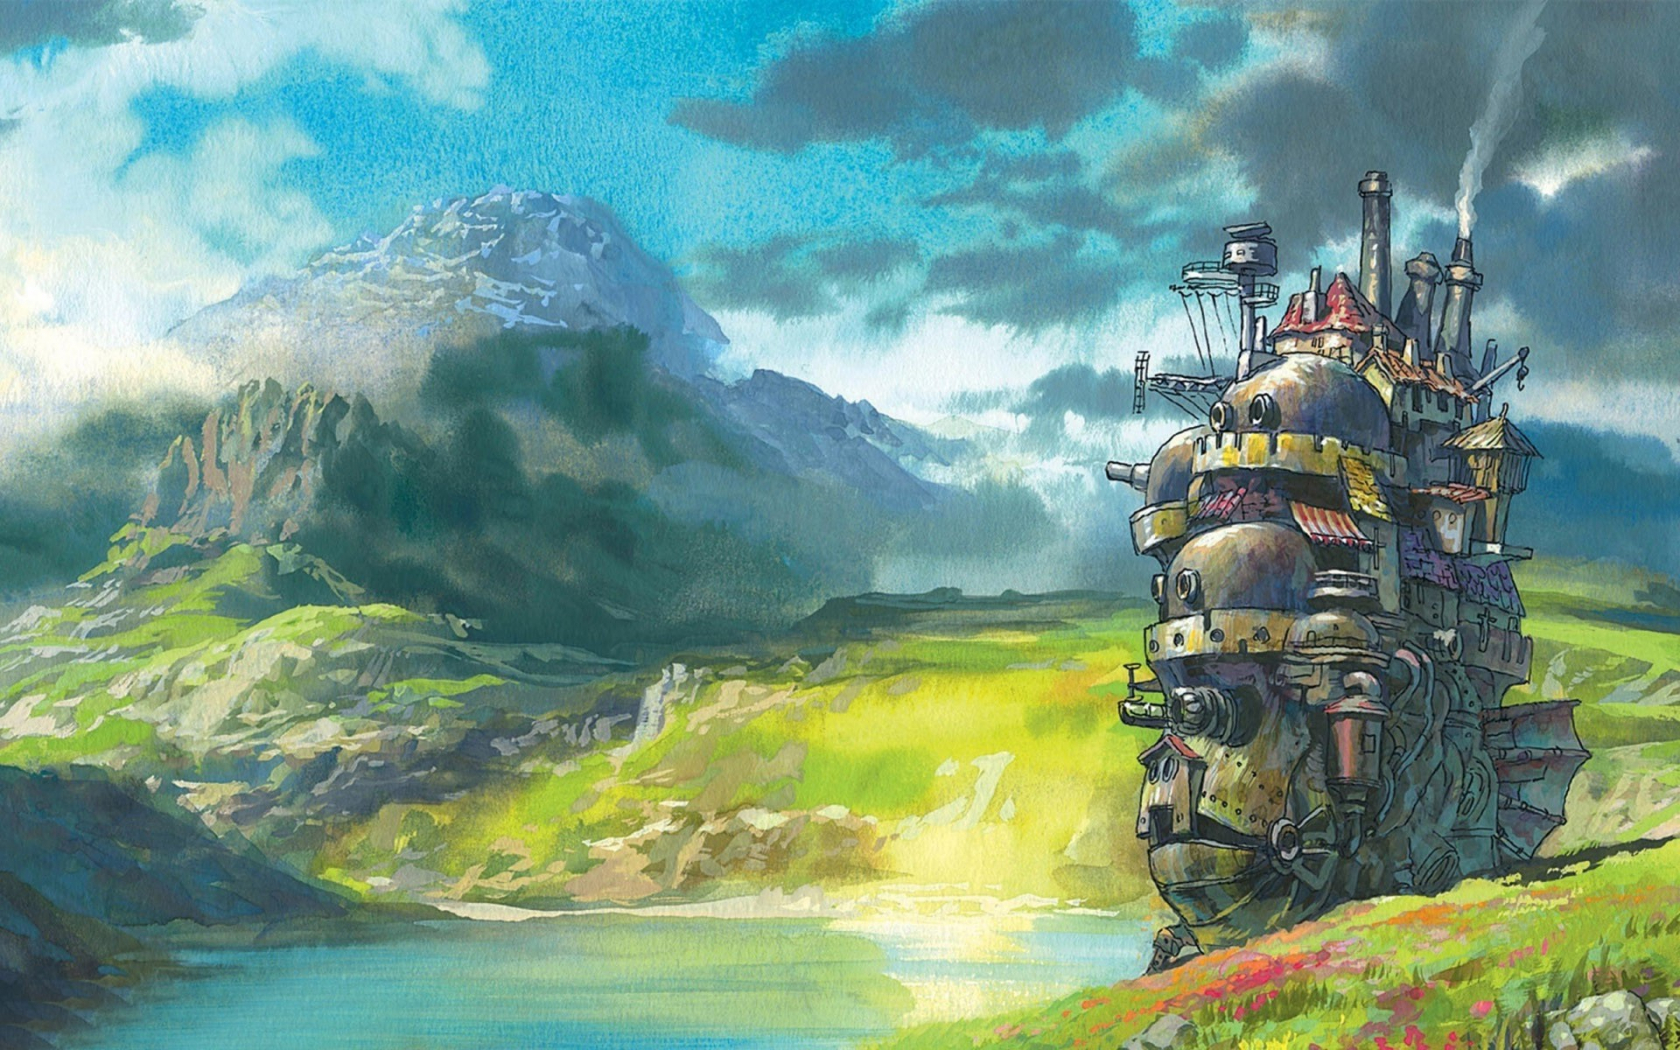 Wallpaper ID 520640  1080P Howls Moving Castle Studio Ghibli pixels  pixel art free download